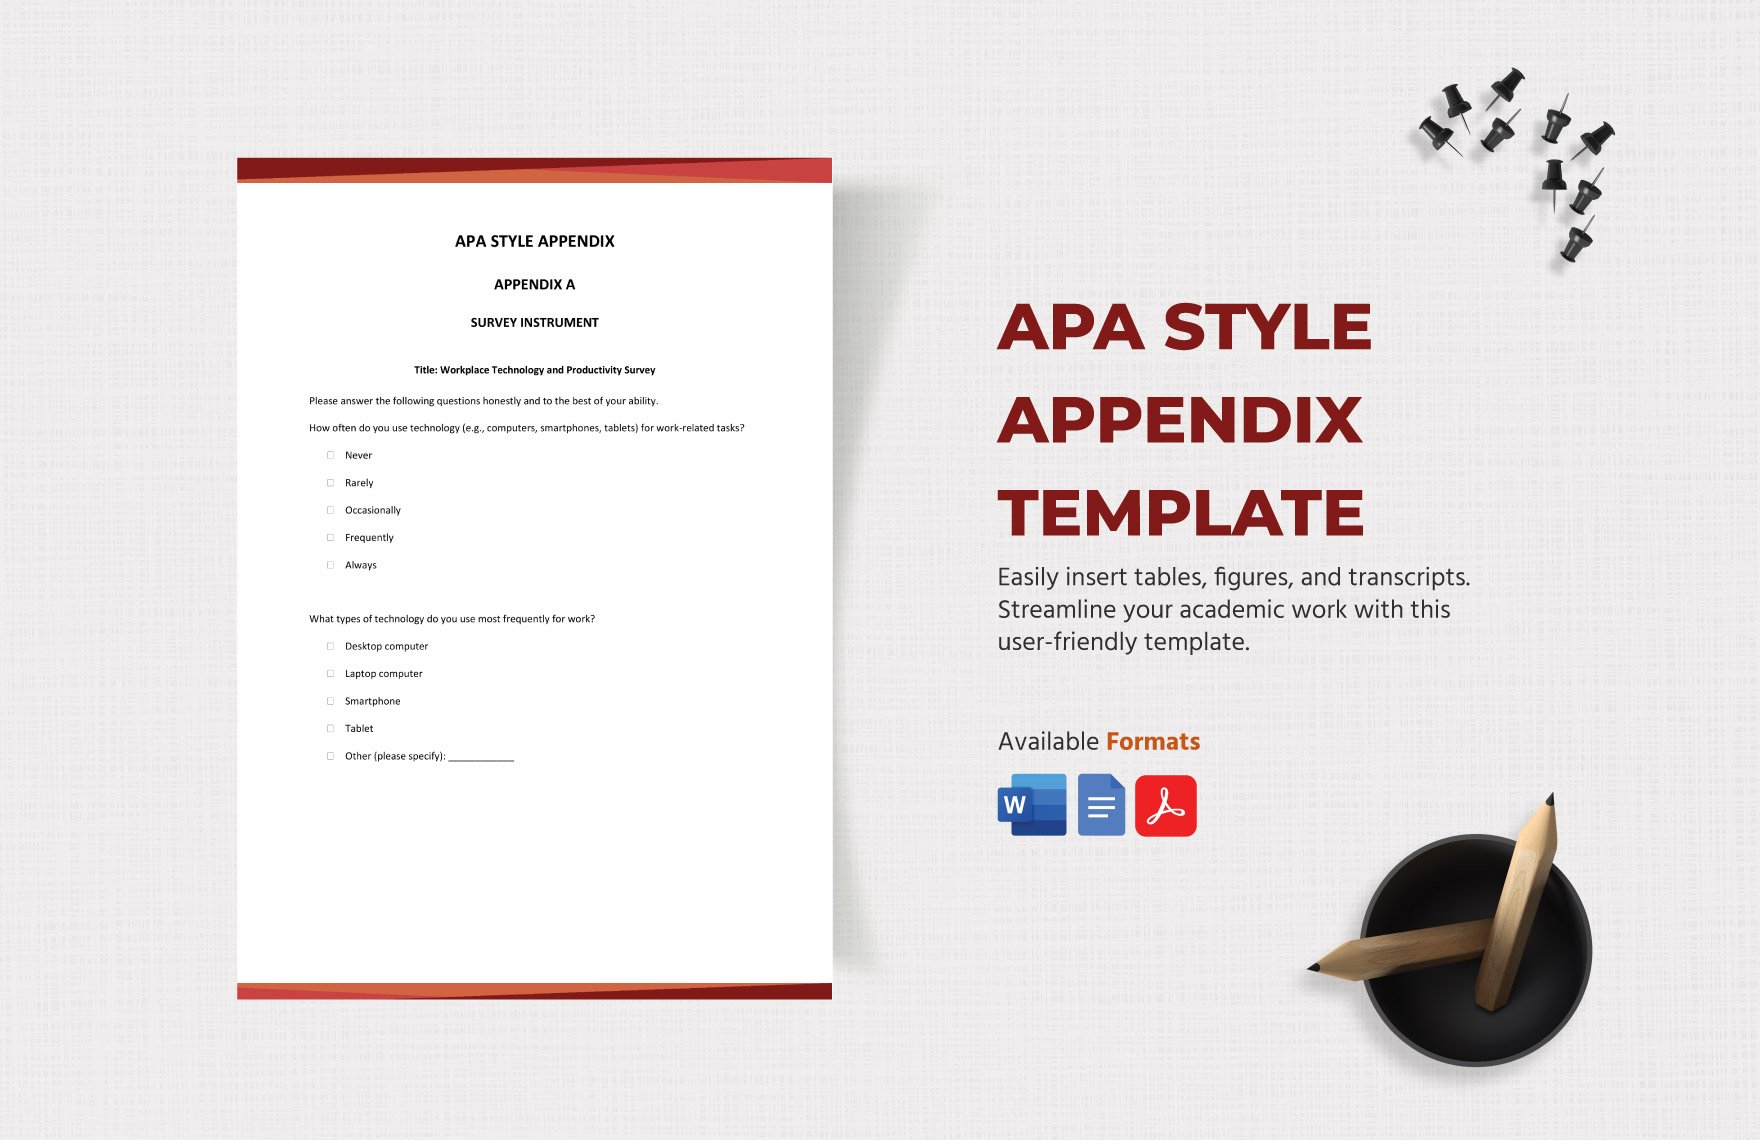 APA Style Appendix Template